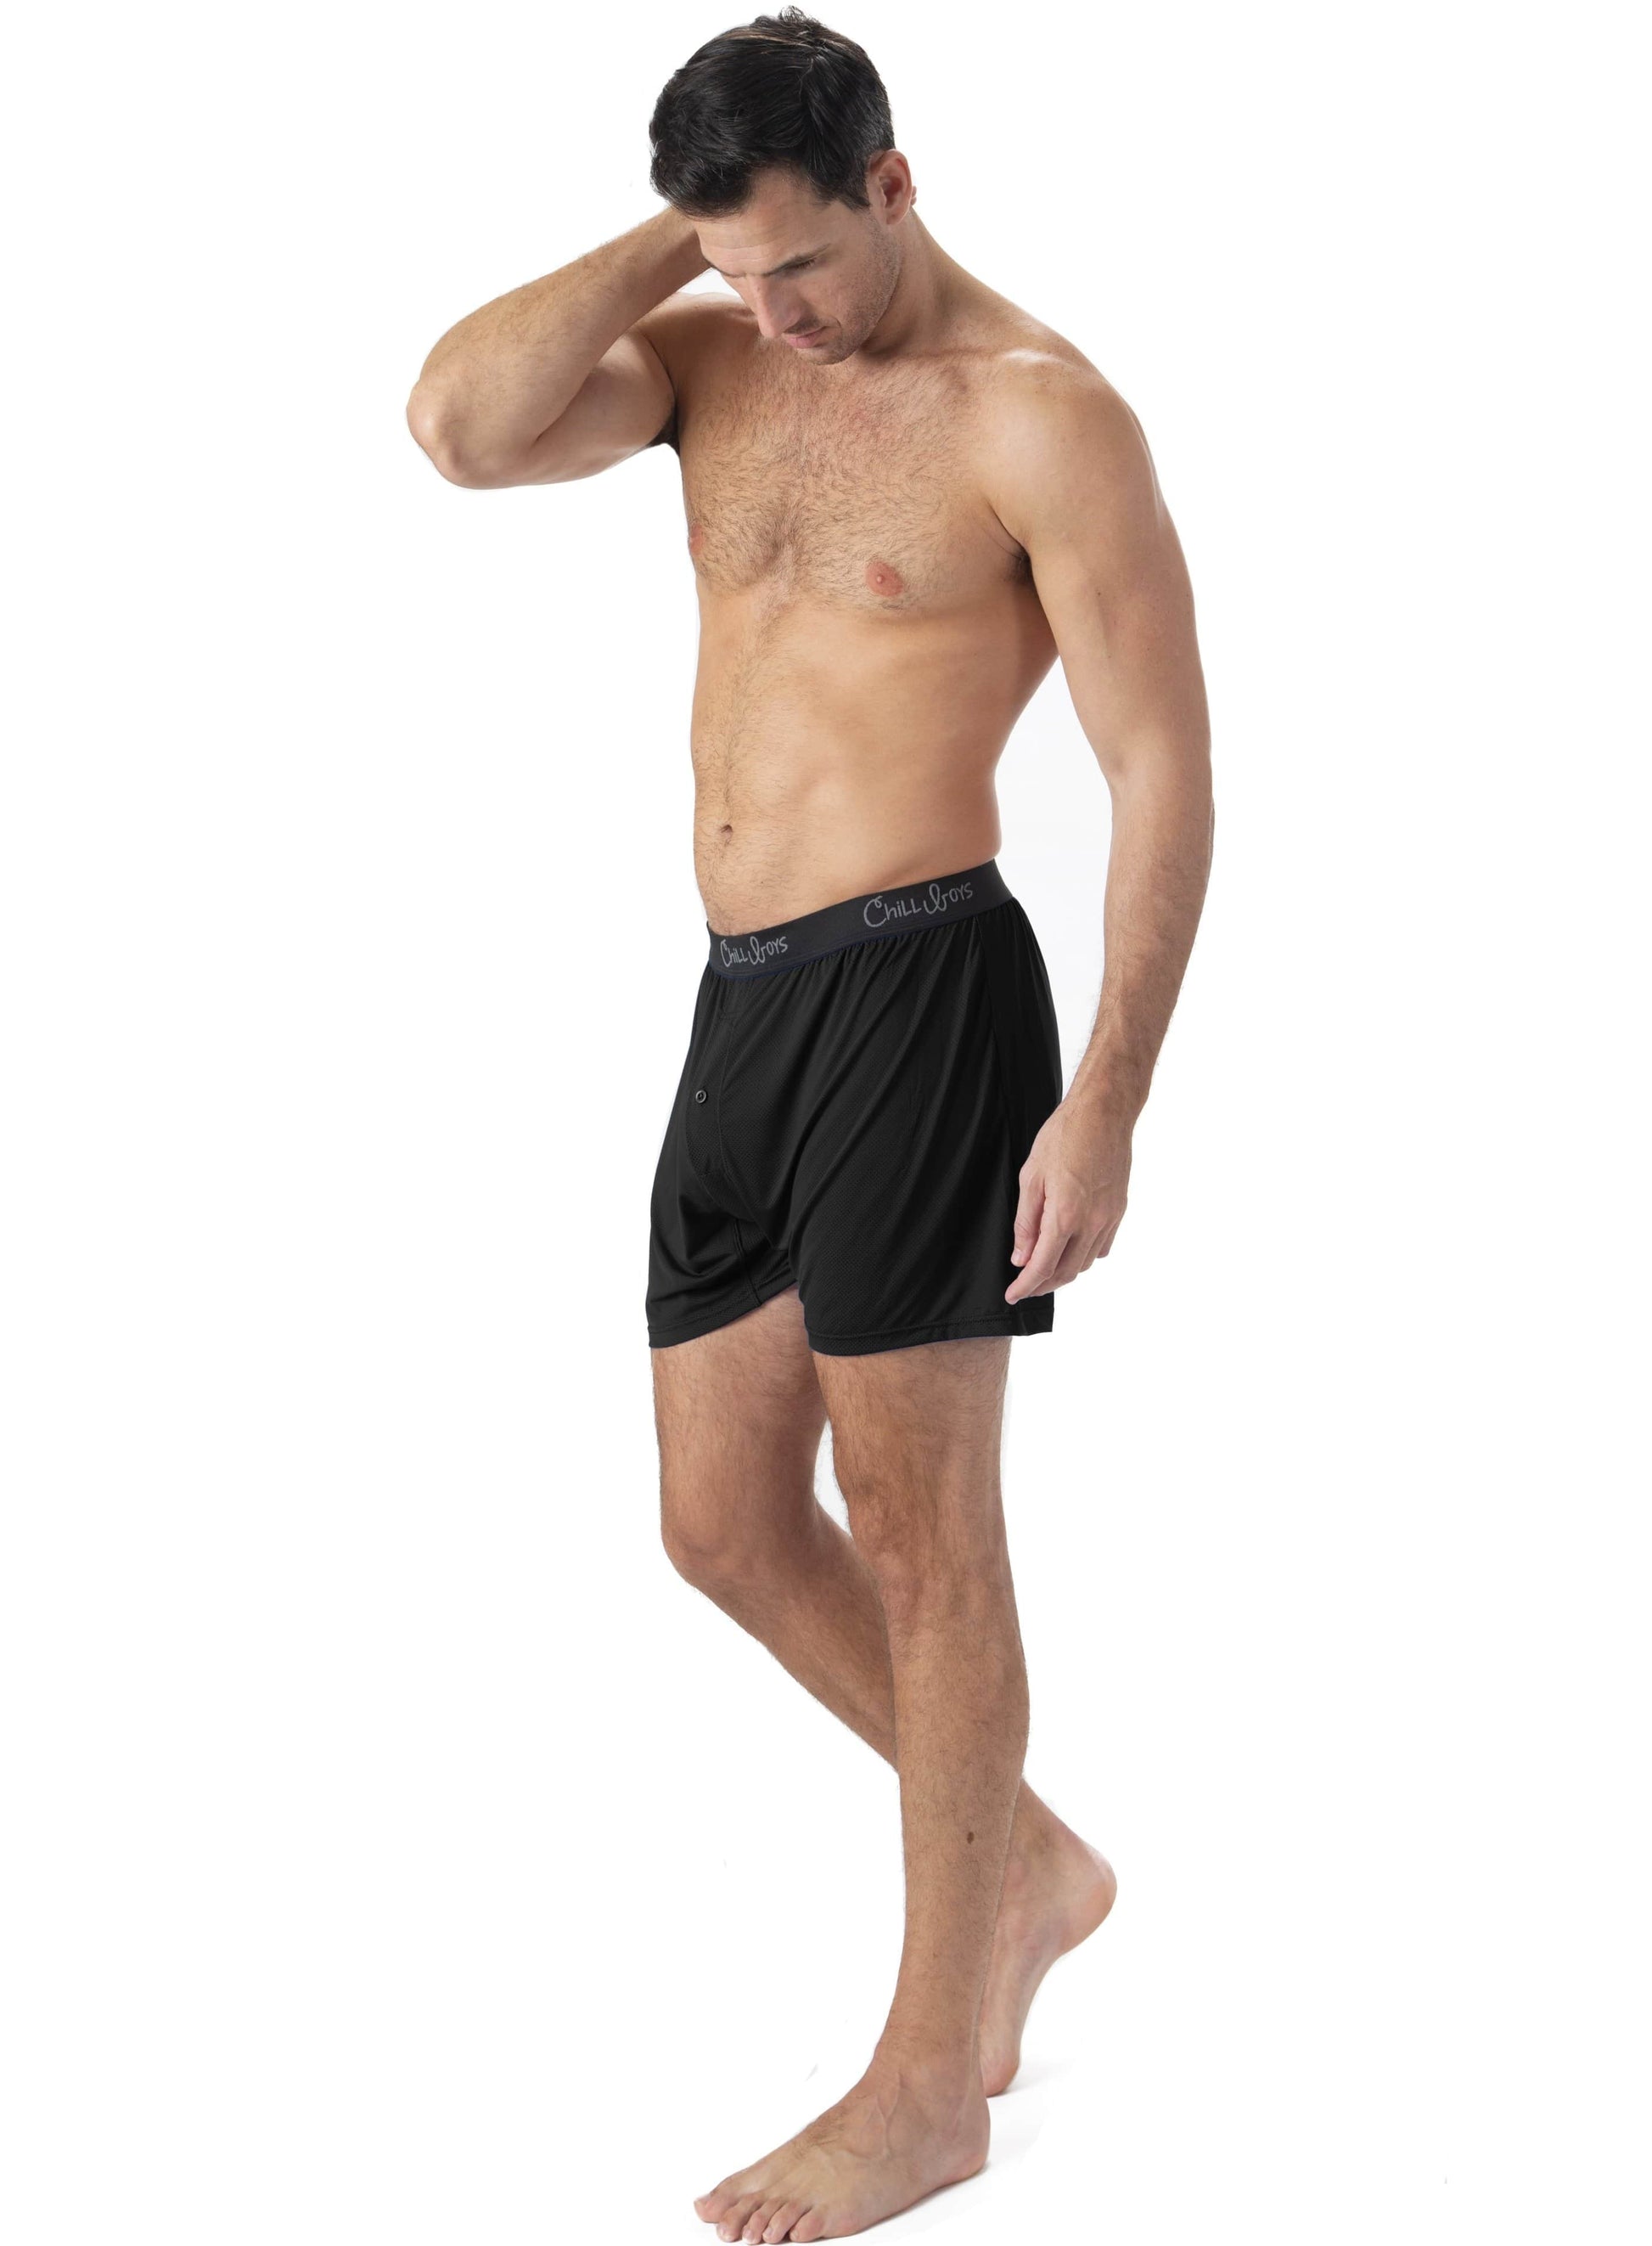 Buy Men's Performance Boxers - Soft & Breathable Boxer Shorts